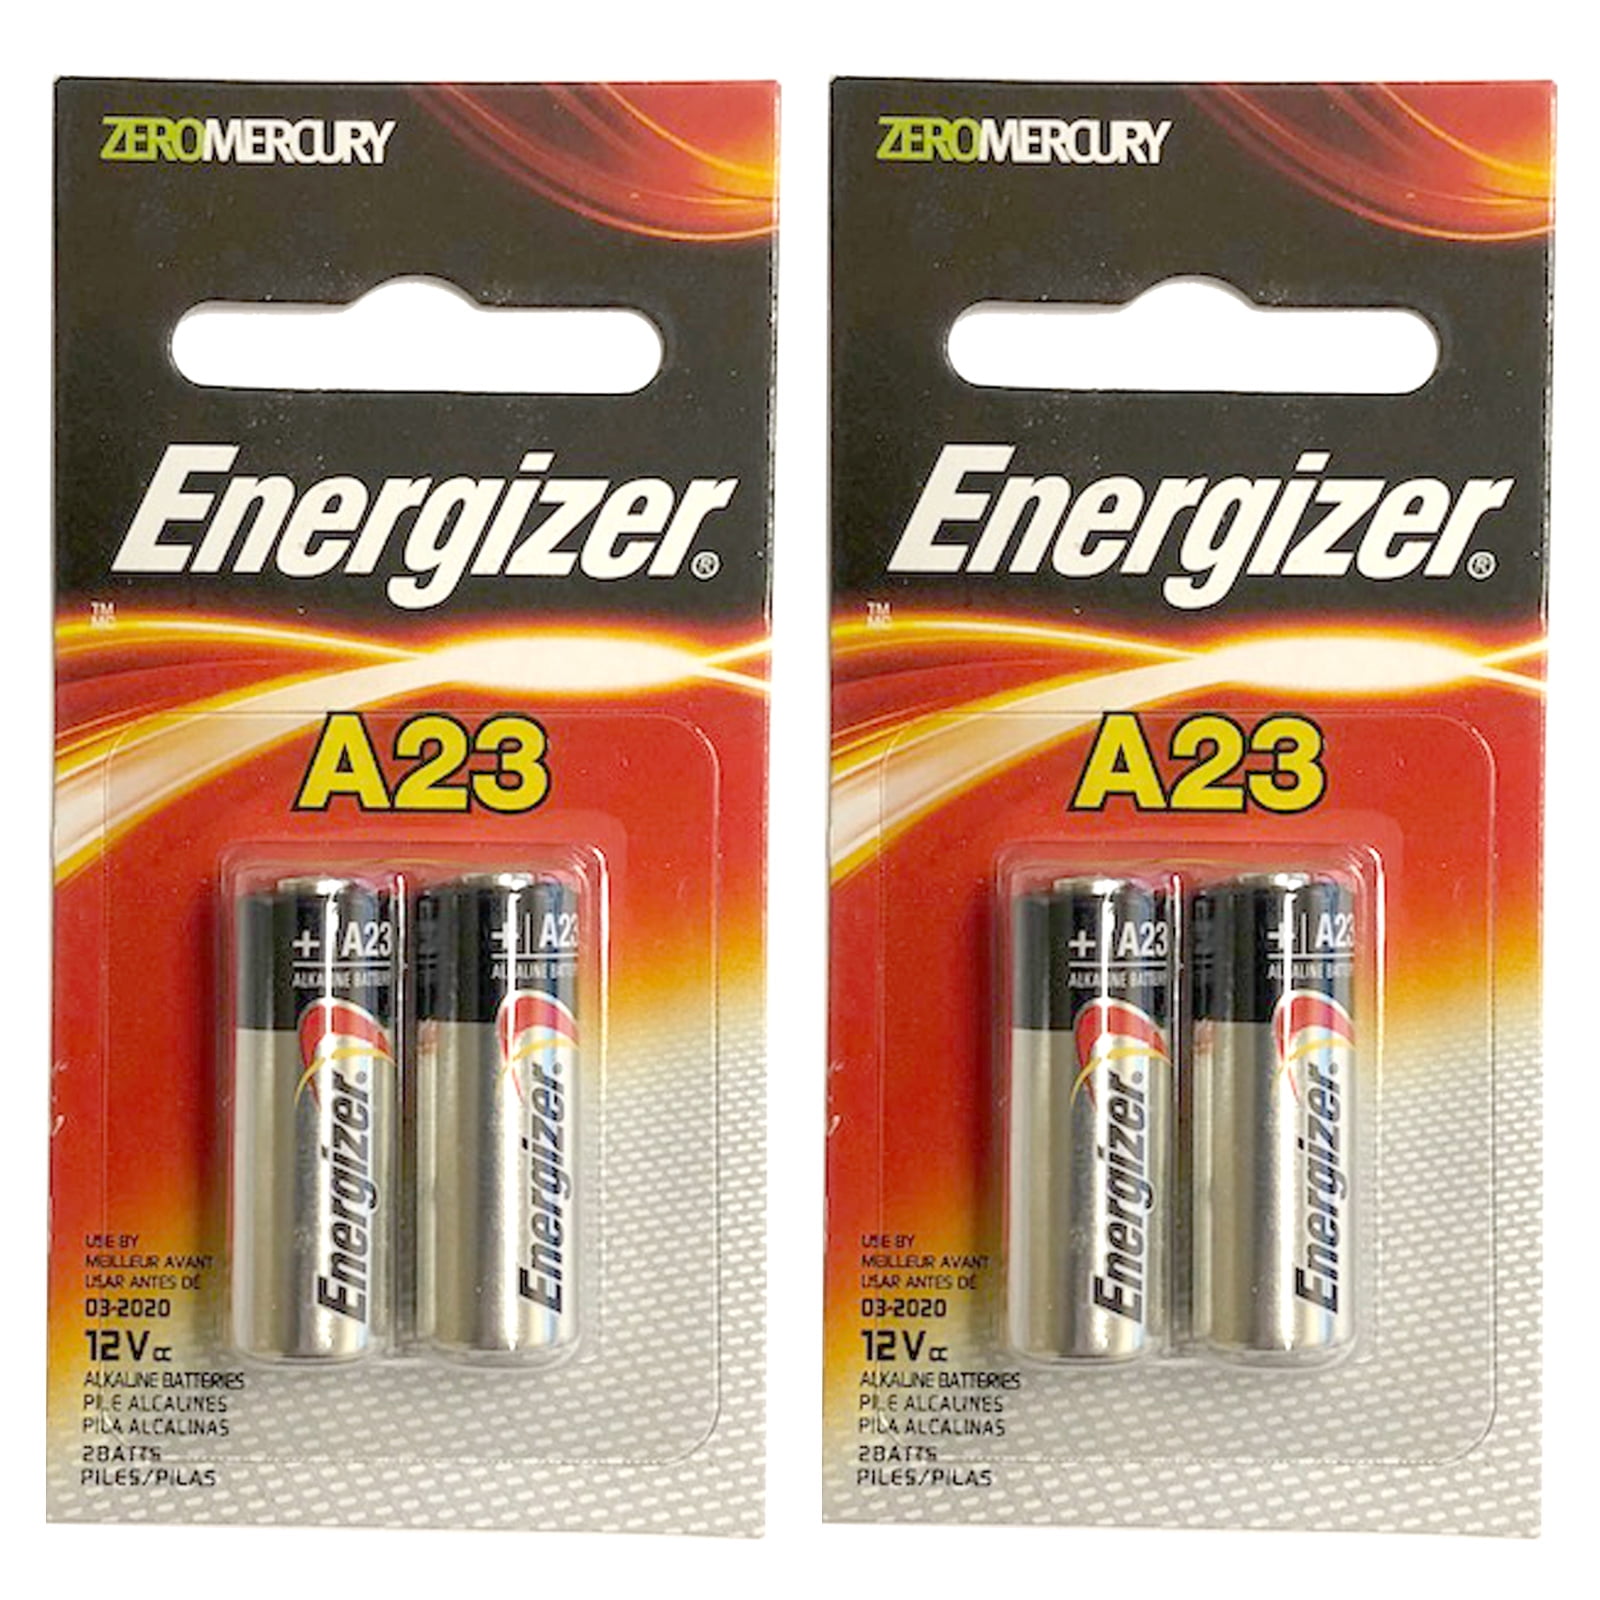 Energizer - 2 x Energizer A23 23A Batterie Pile alcaline 12 V, Energizer